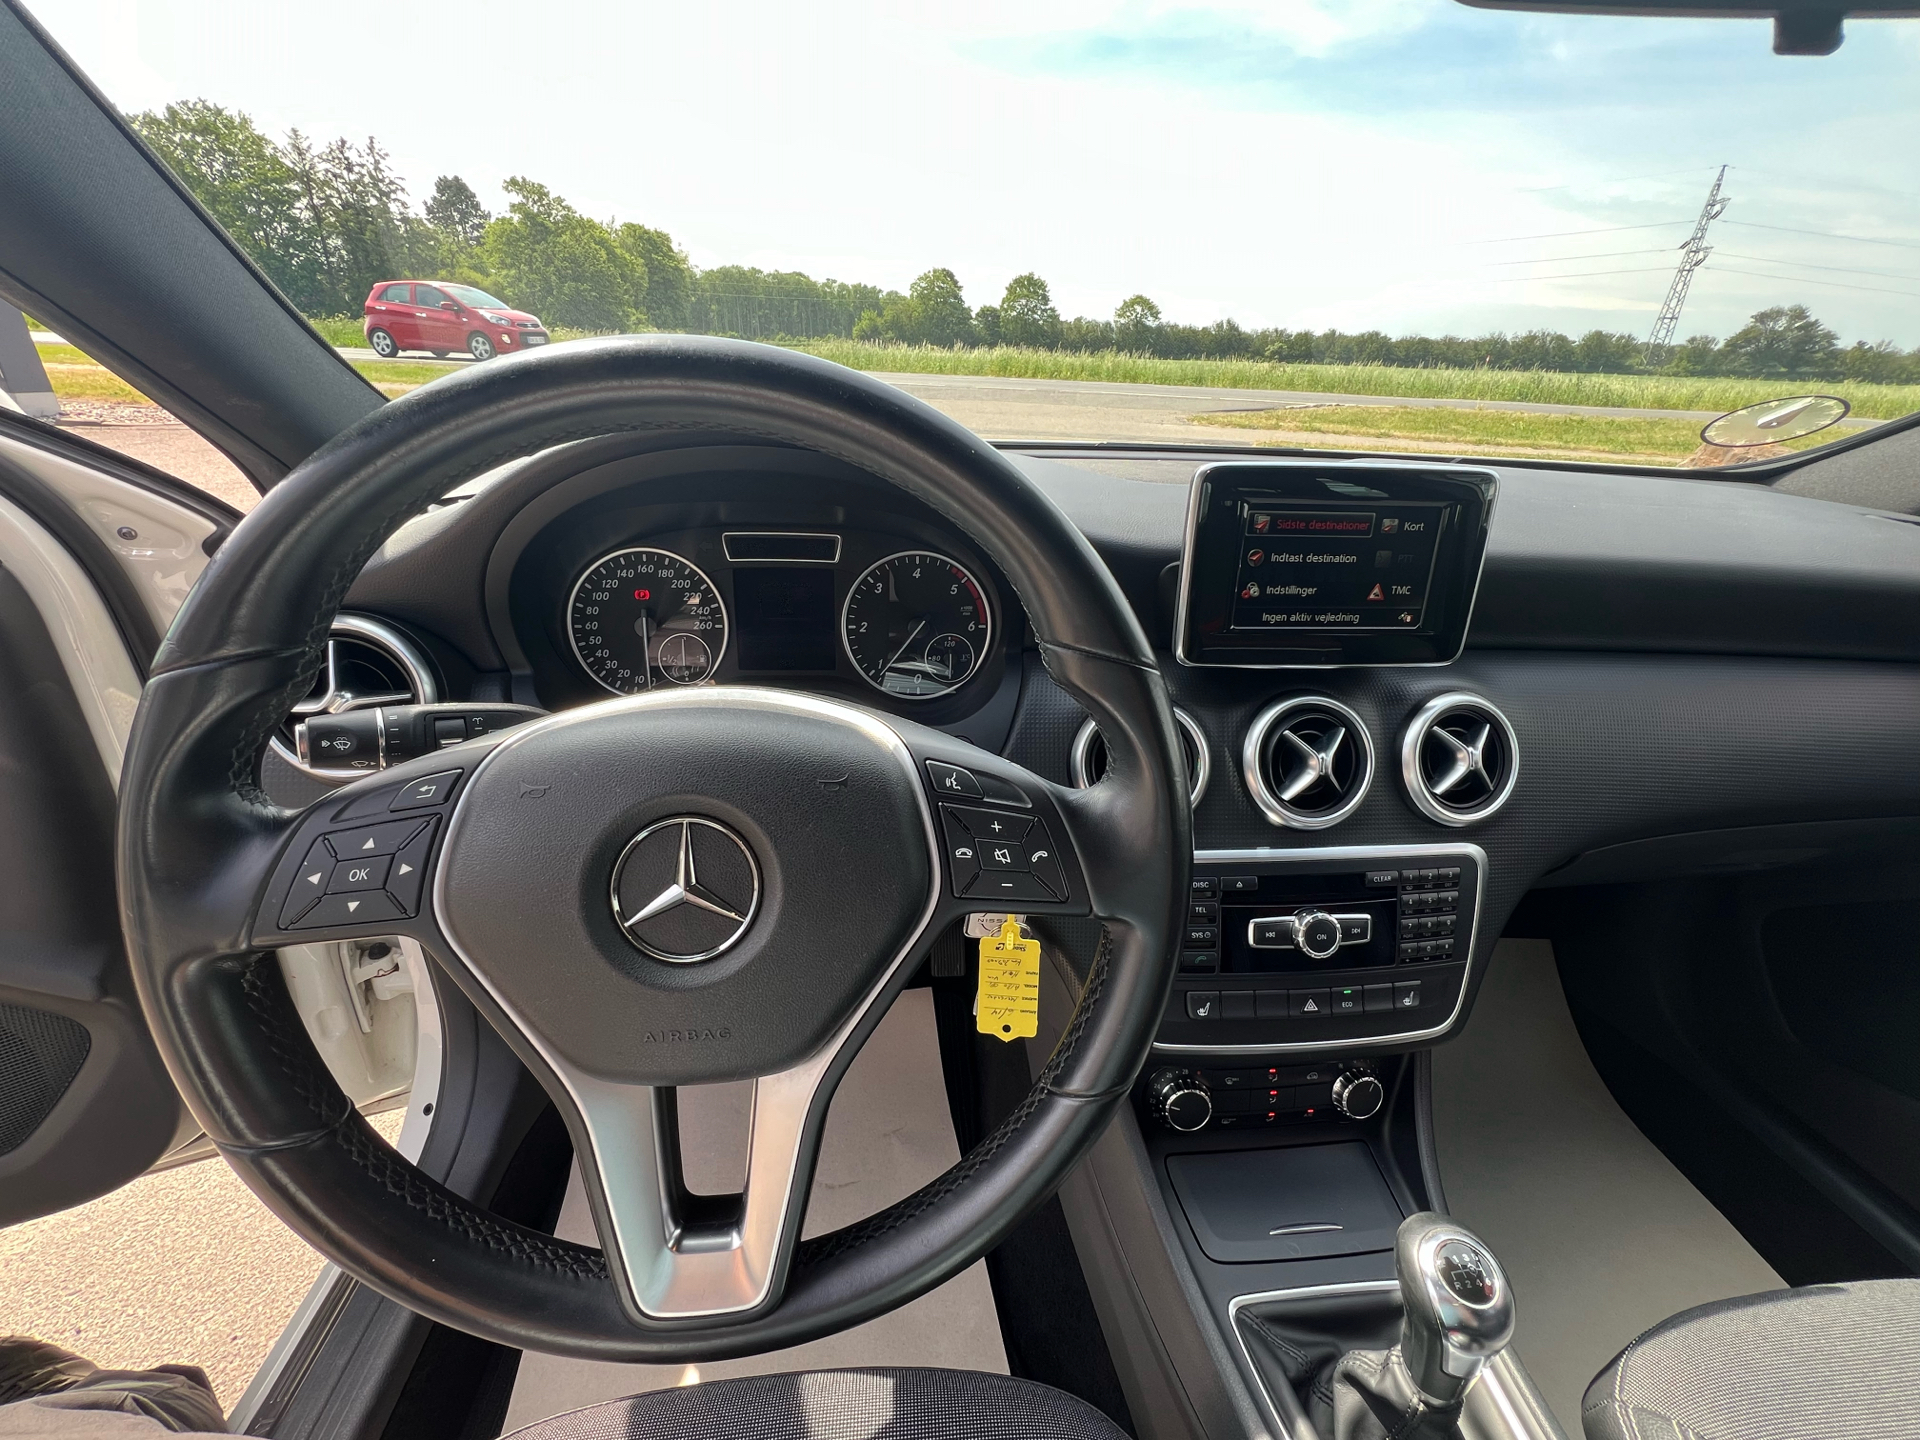 Billede af Mercedes-Benz A180 d 1,5 CDI BlueEfficiency Edition 108HK 5d 6g